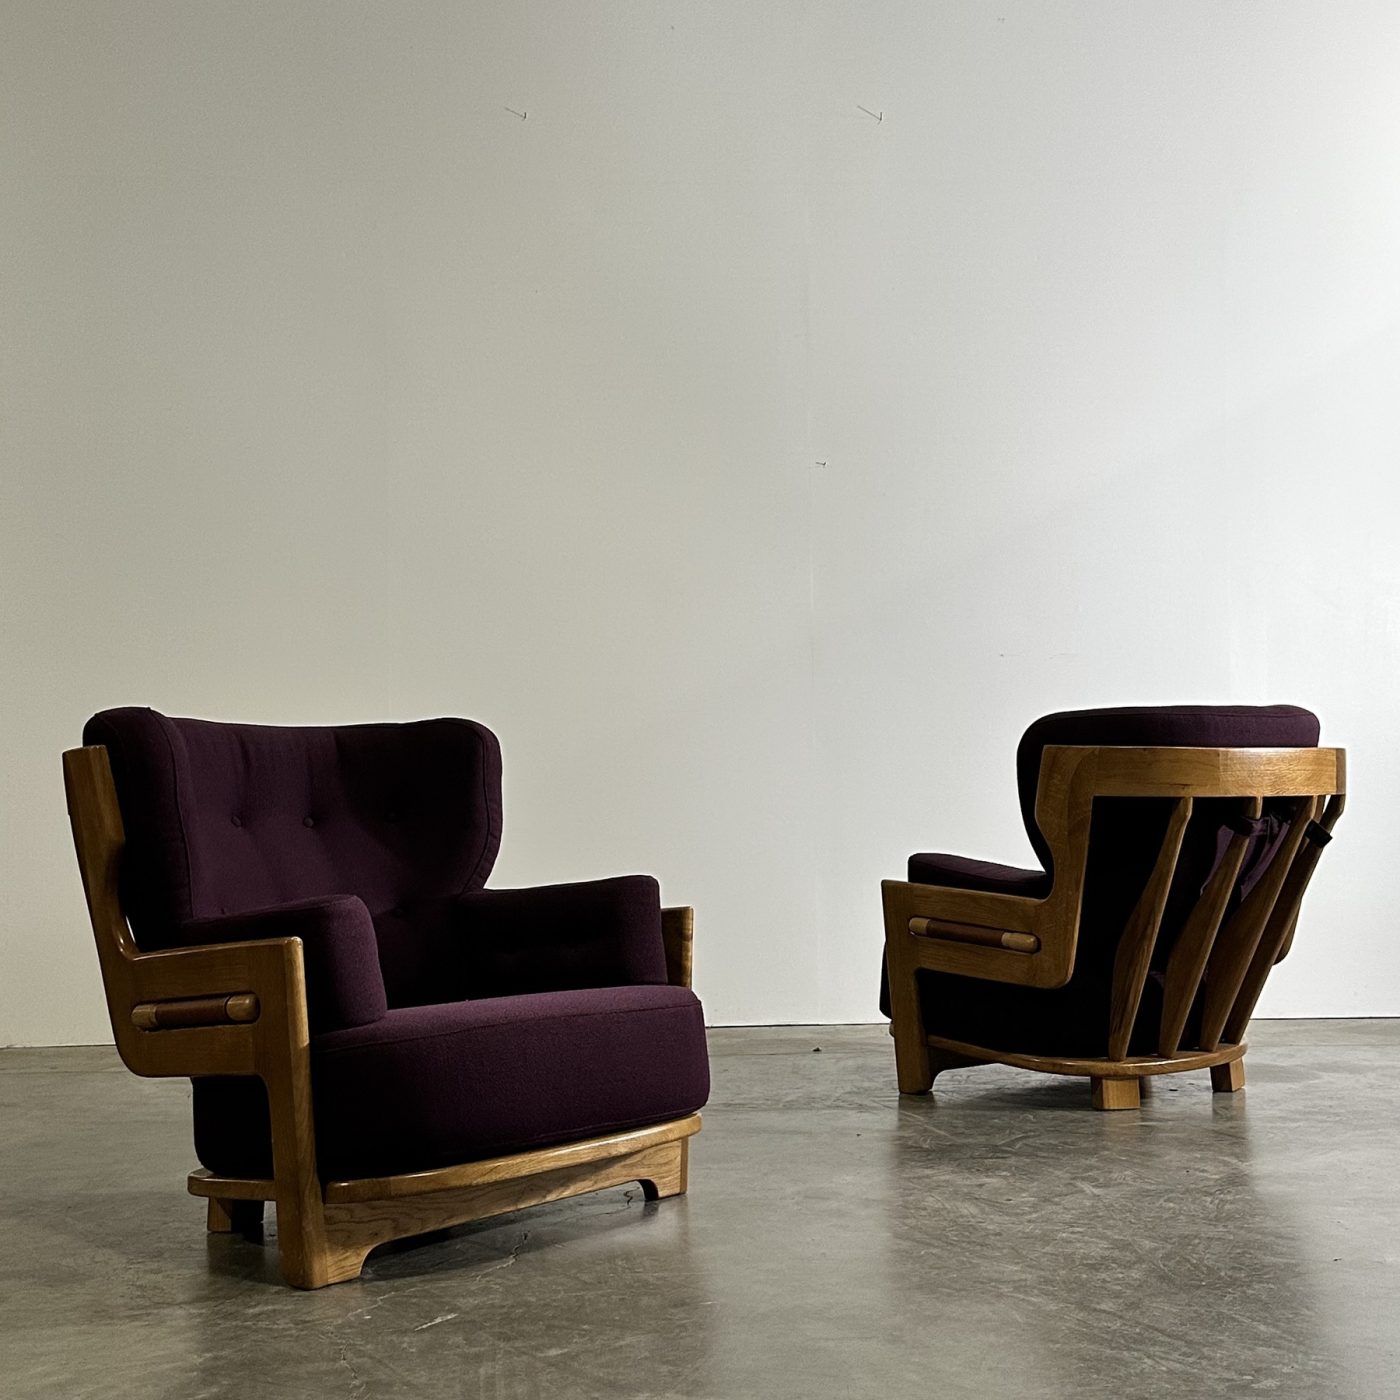 objet-vagabond-denis-armchairs0000